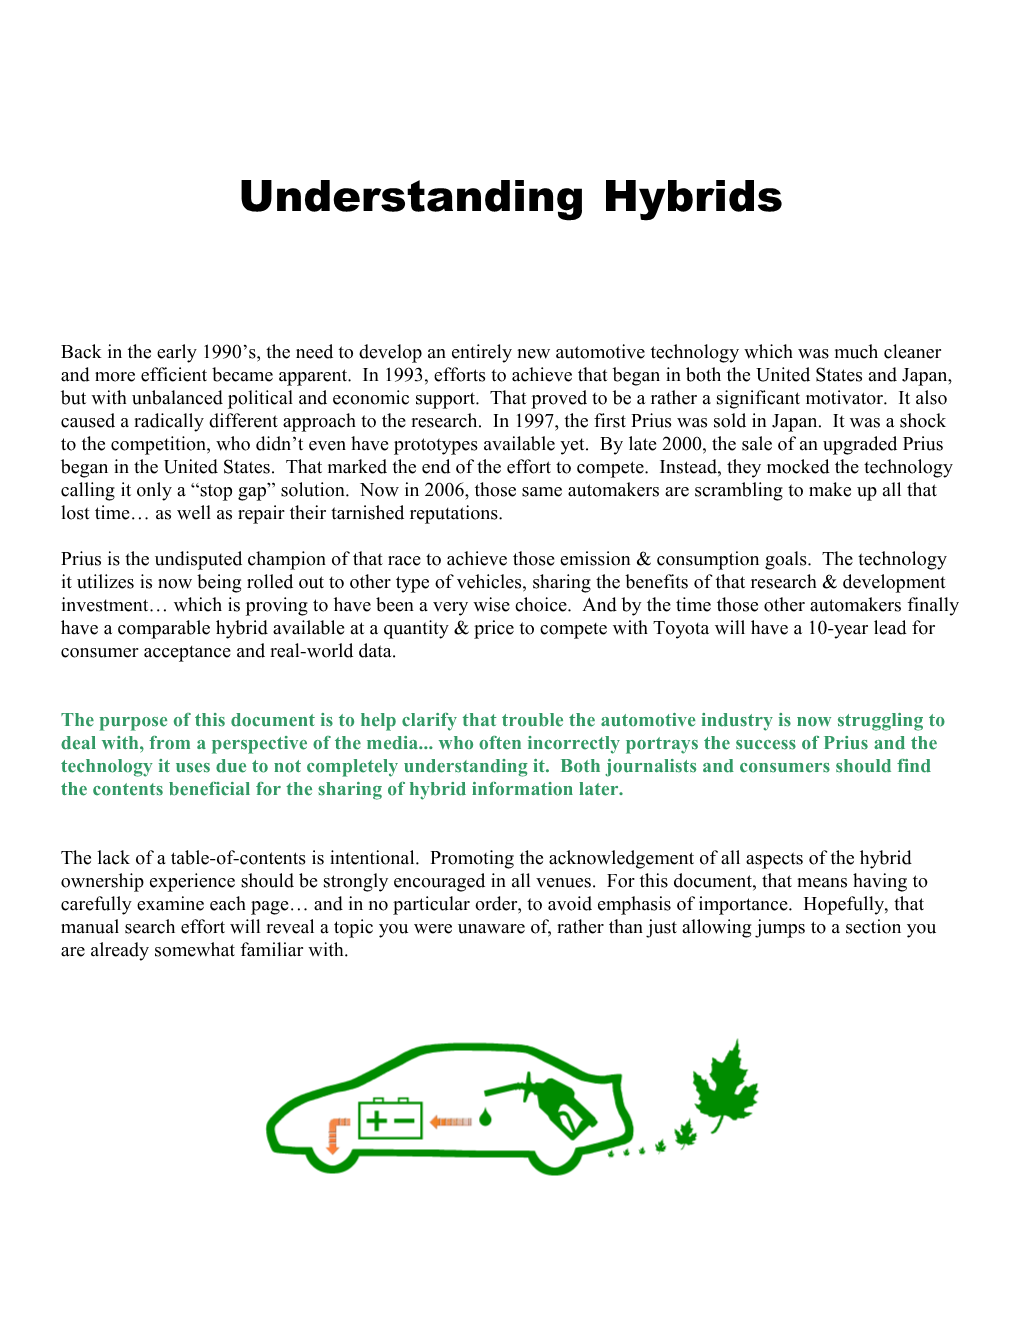 Prius: Understanding Hybrids